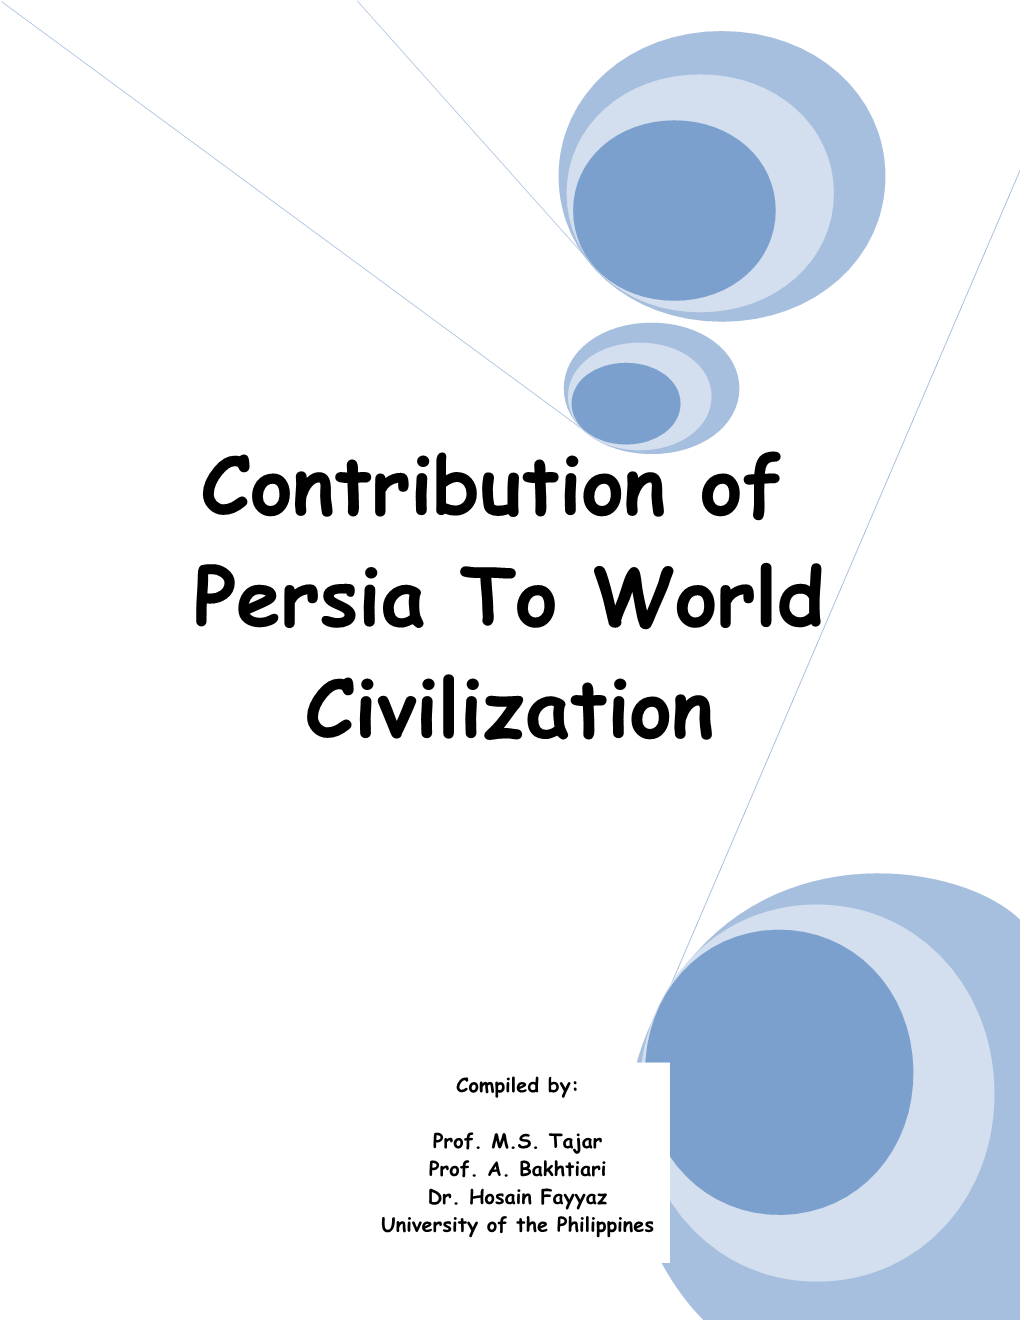 Contribution of Persia to the World Civilization